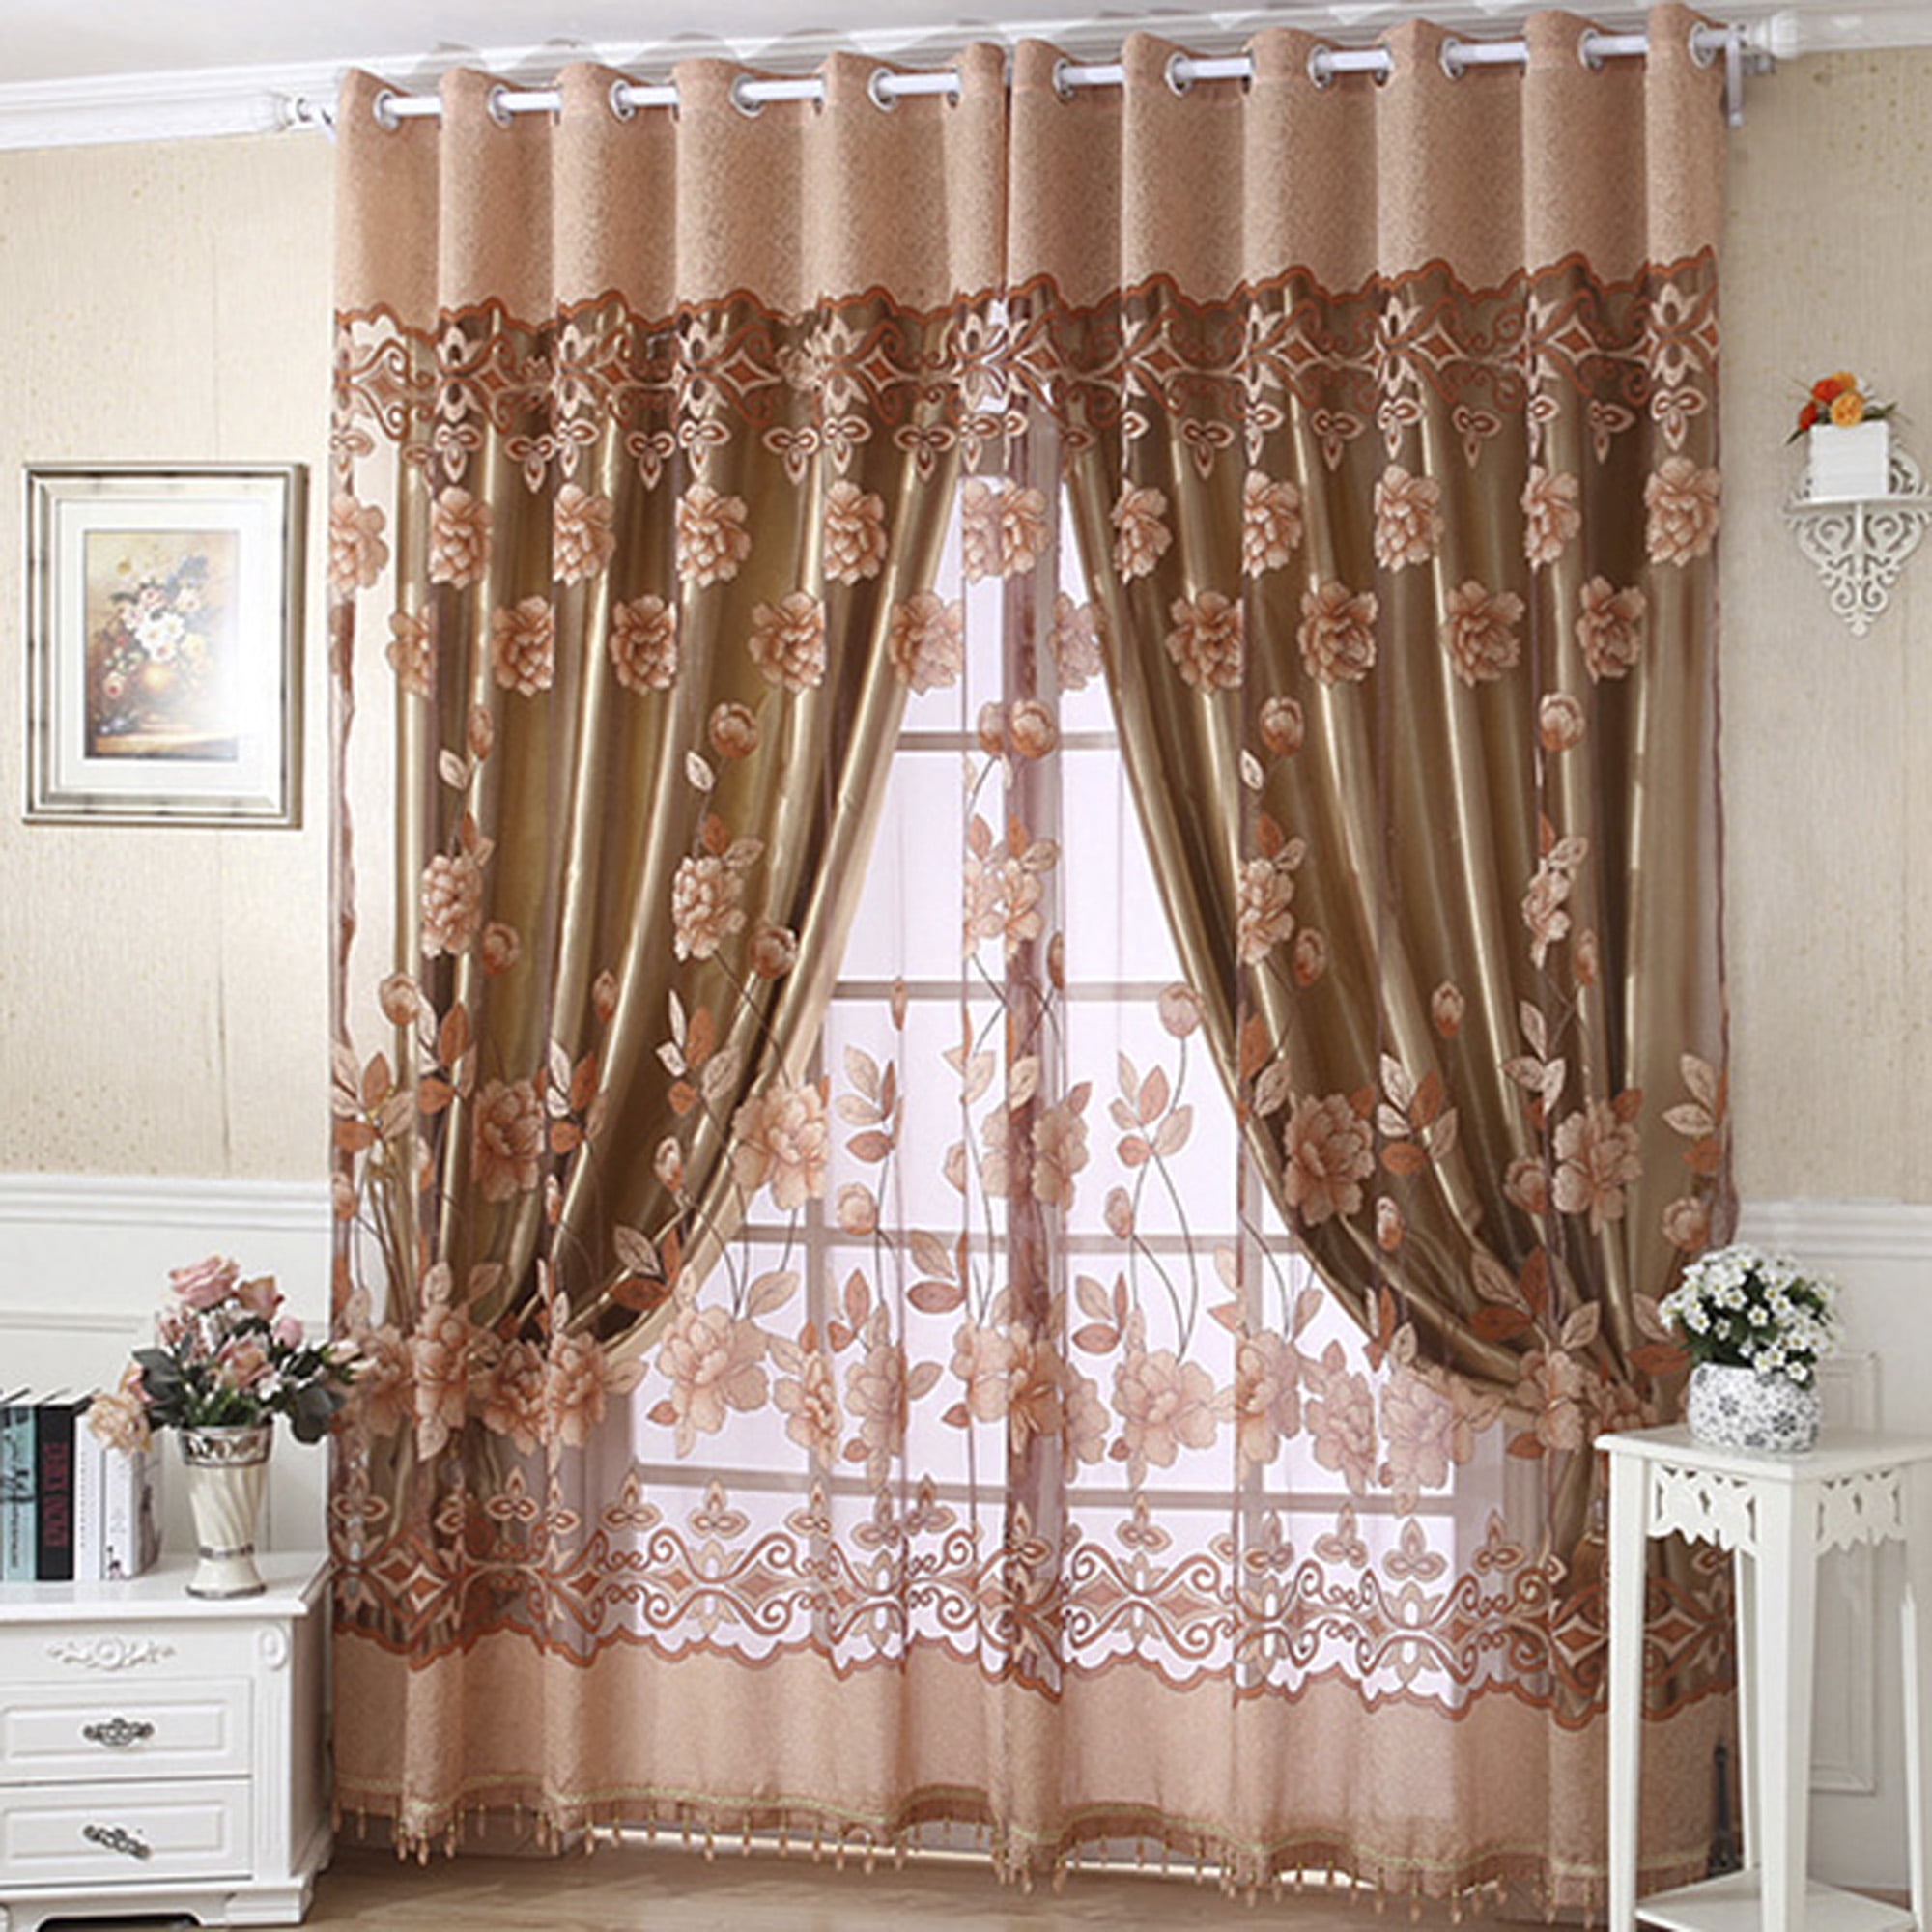 Details about    Indian Mandala Door Wall Window Curtain Drape Panel Valances Decorate Curtains 